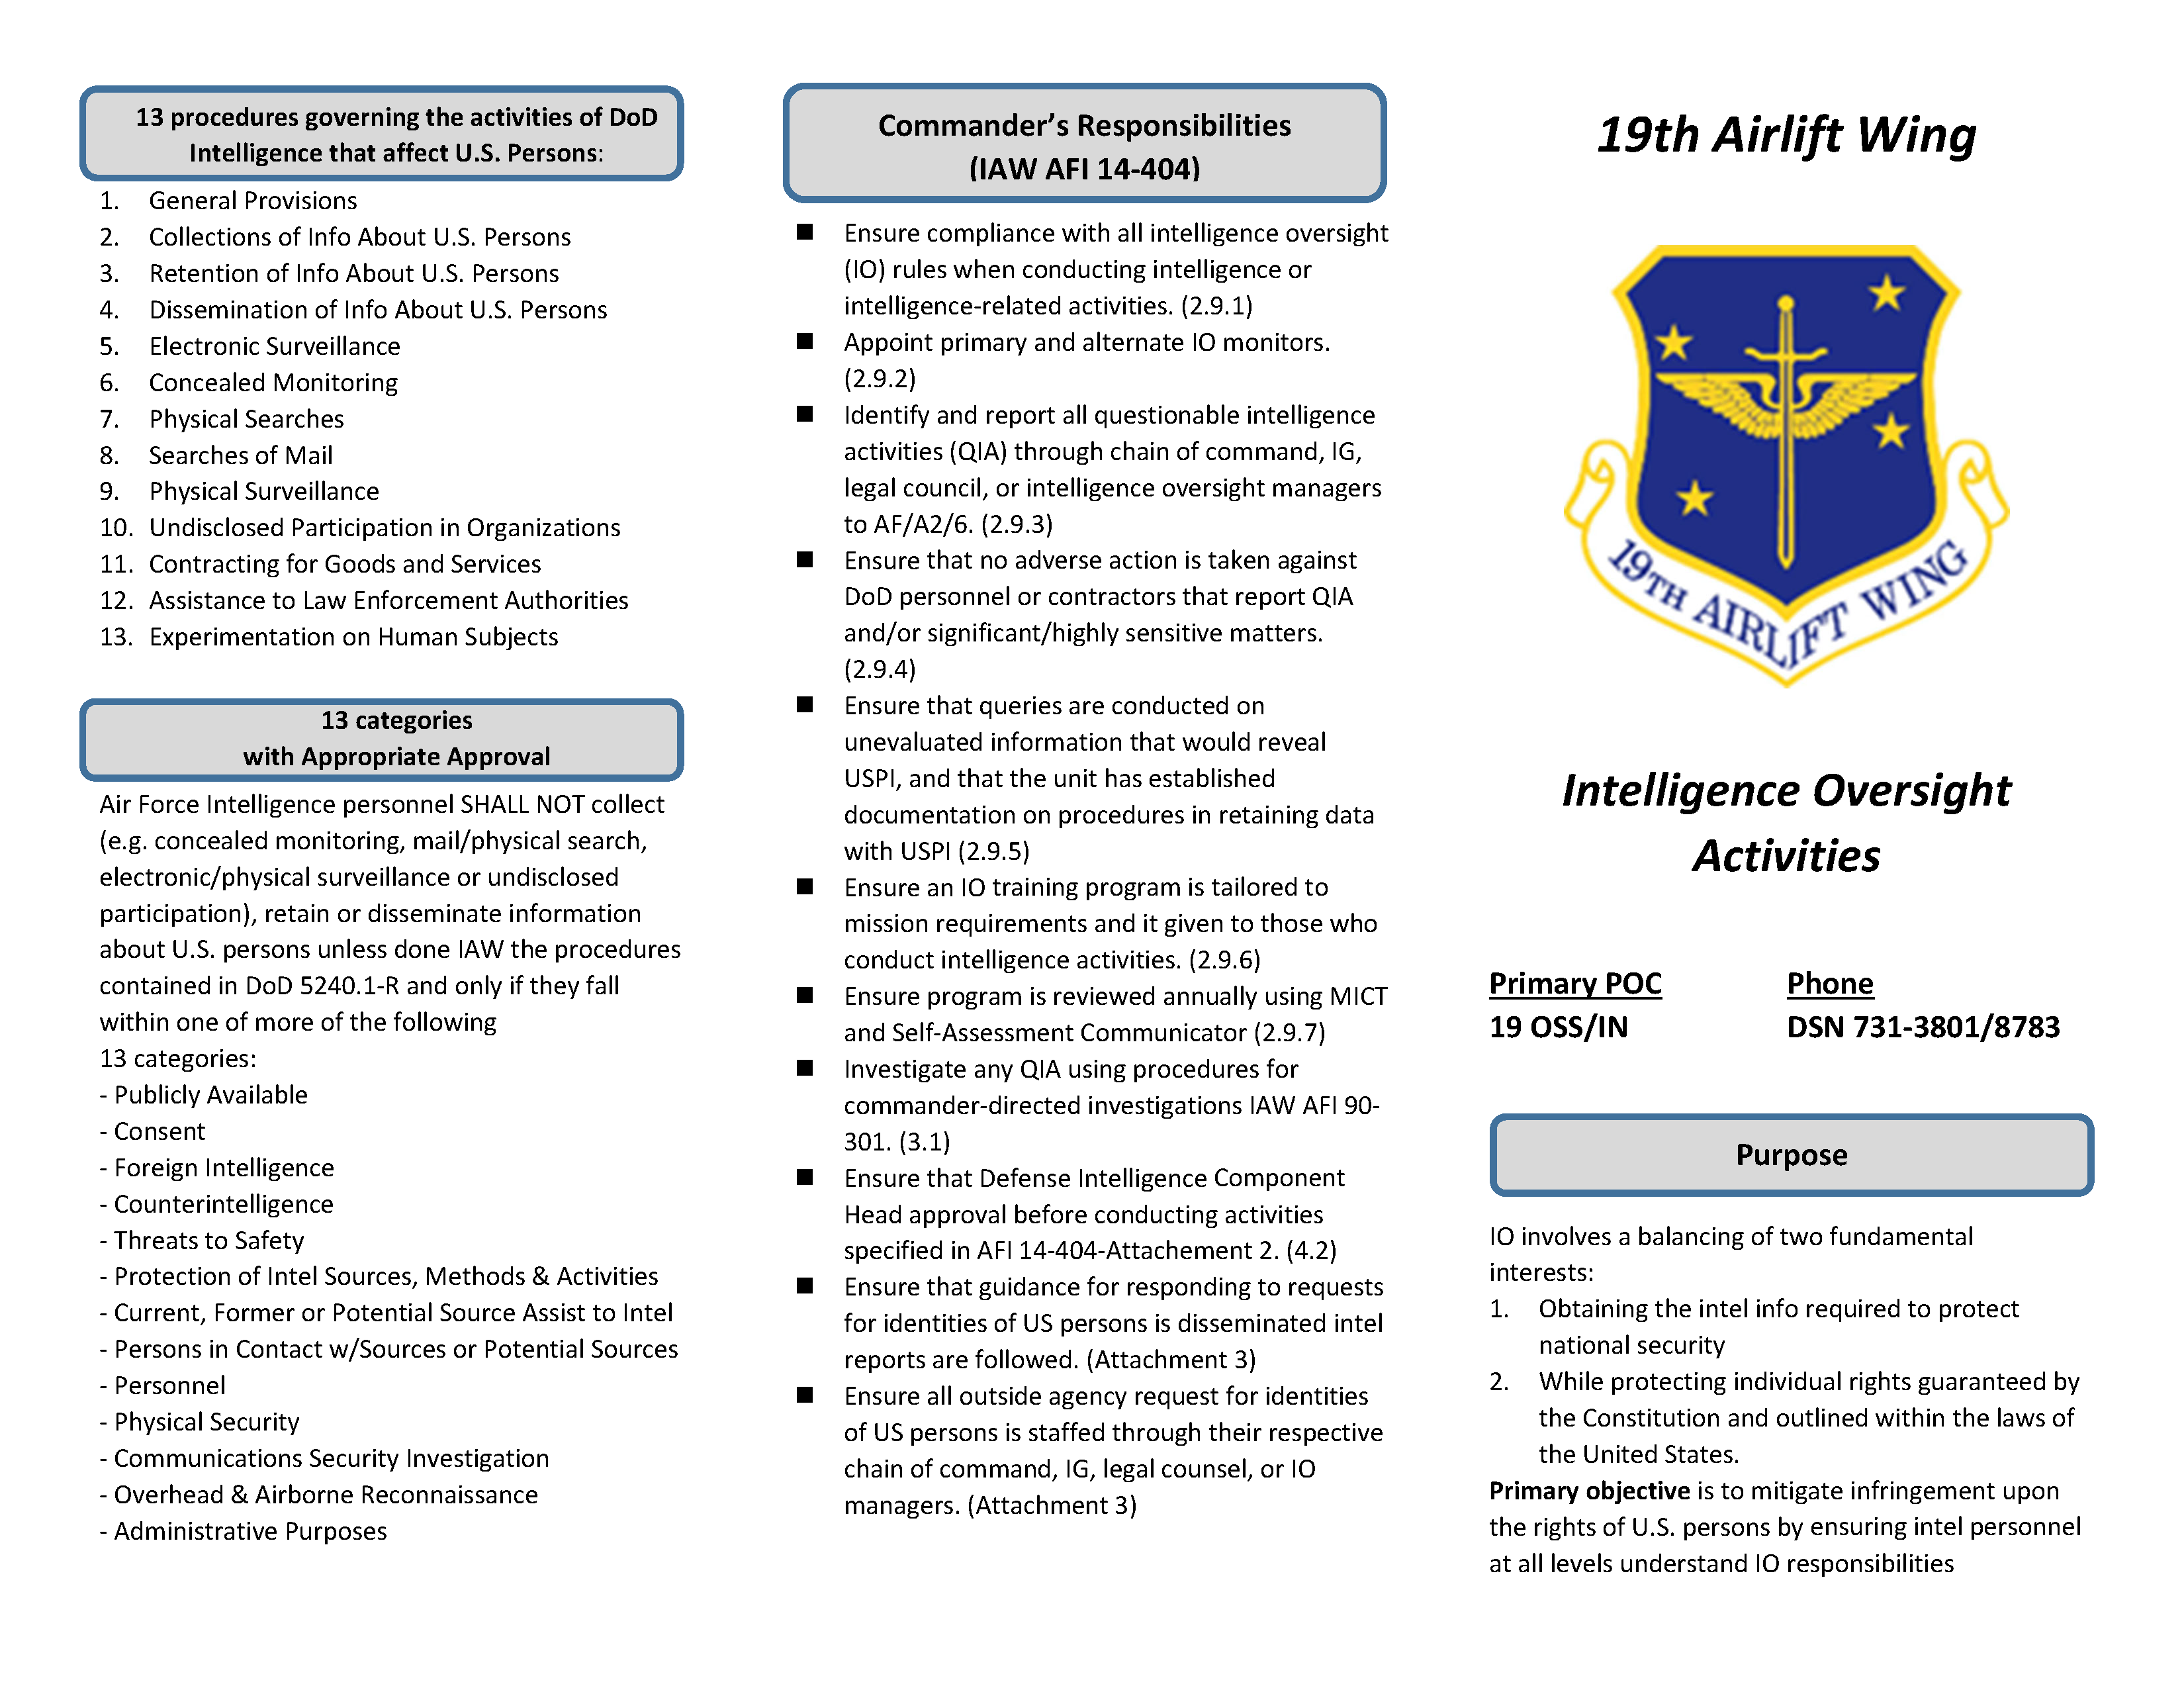 Poster of Intelligence Oversight Activities